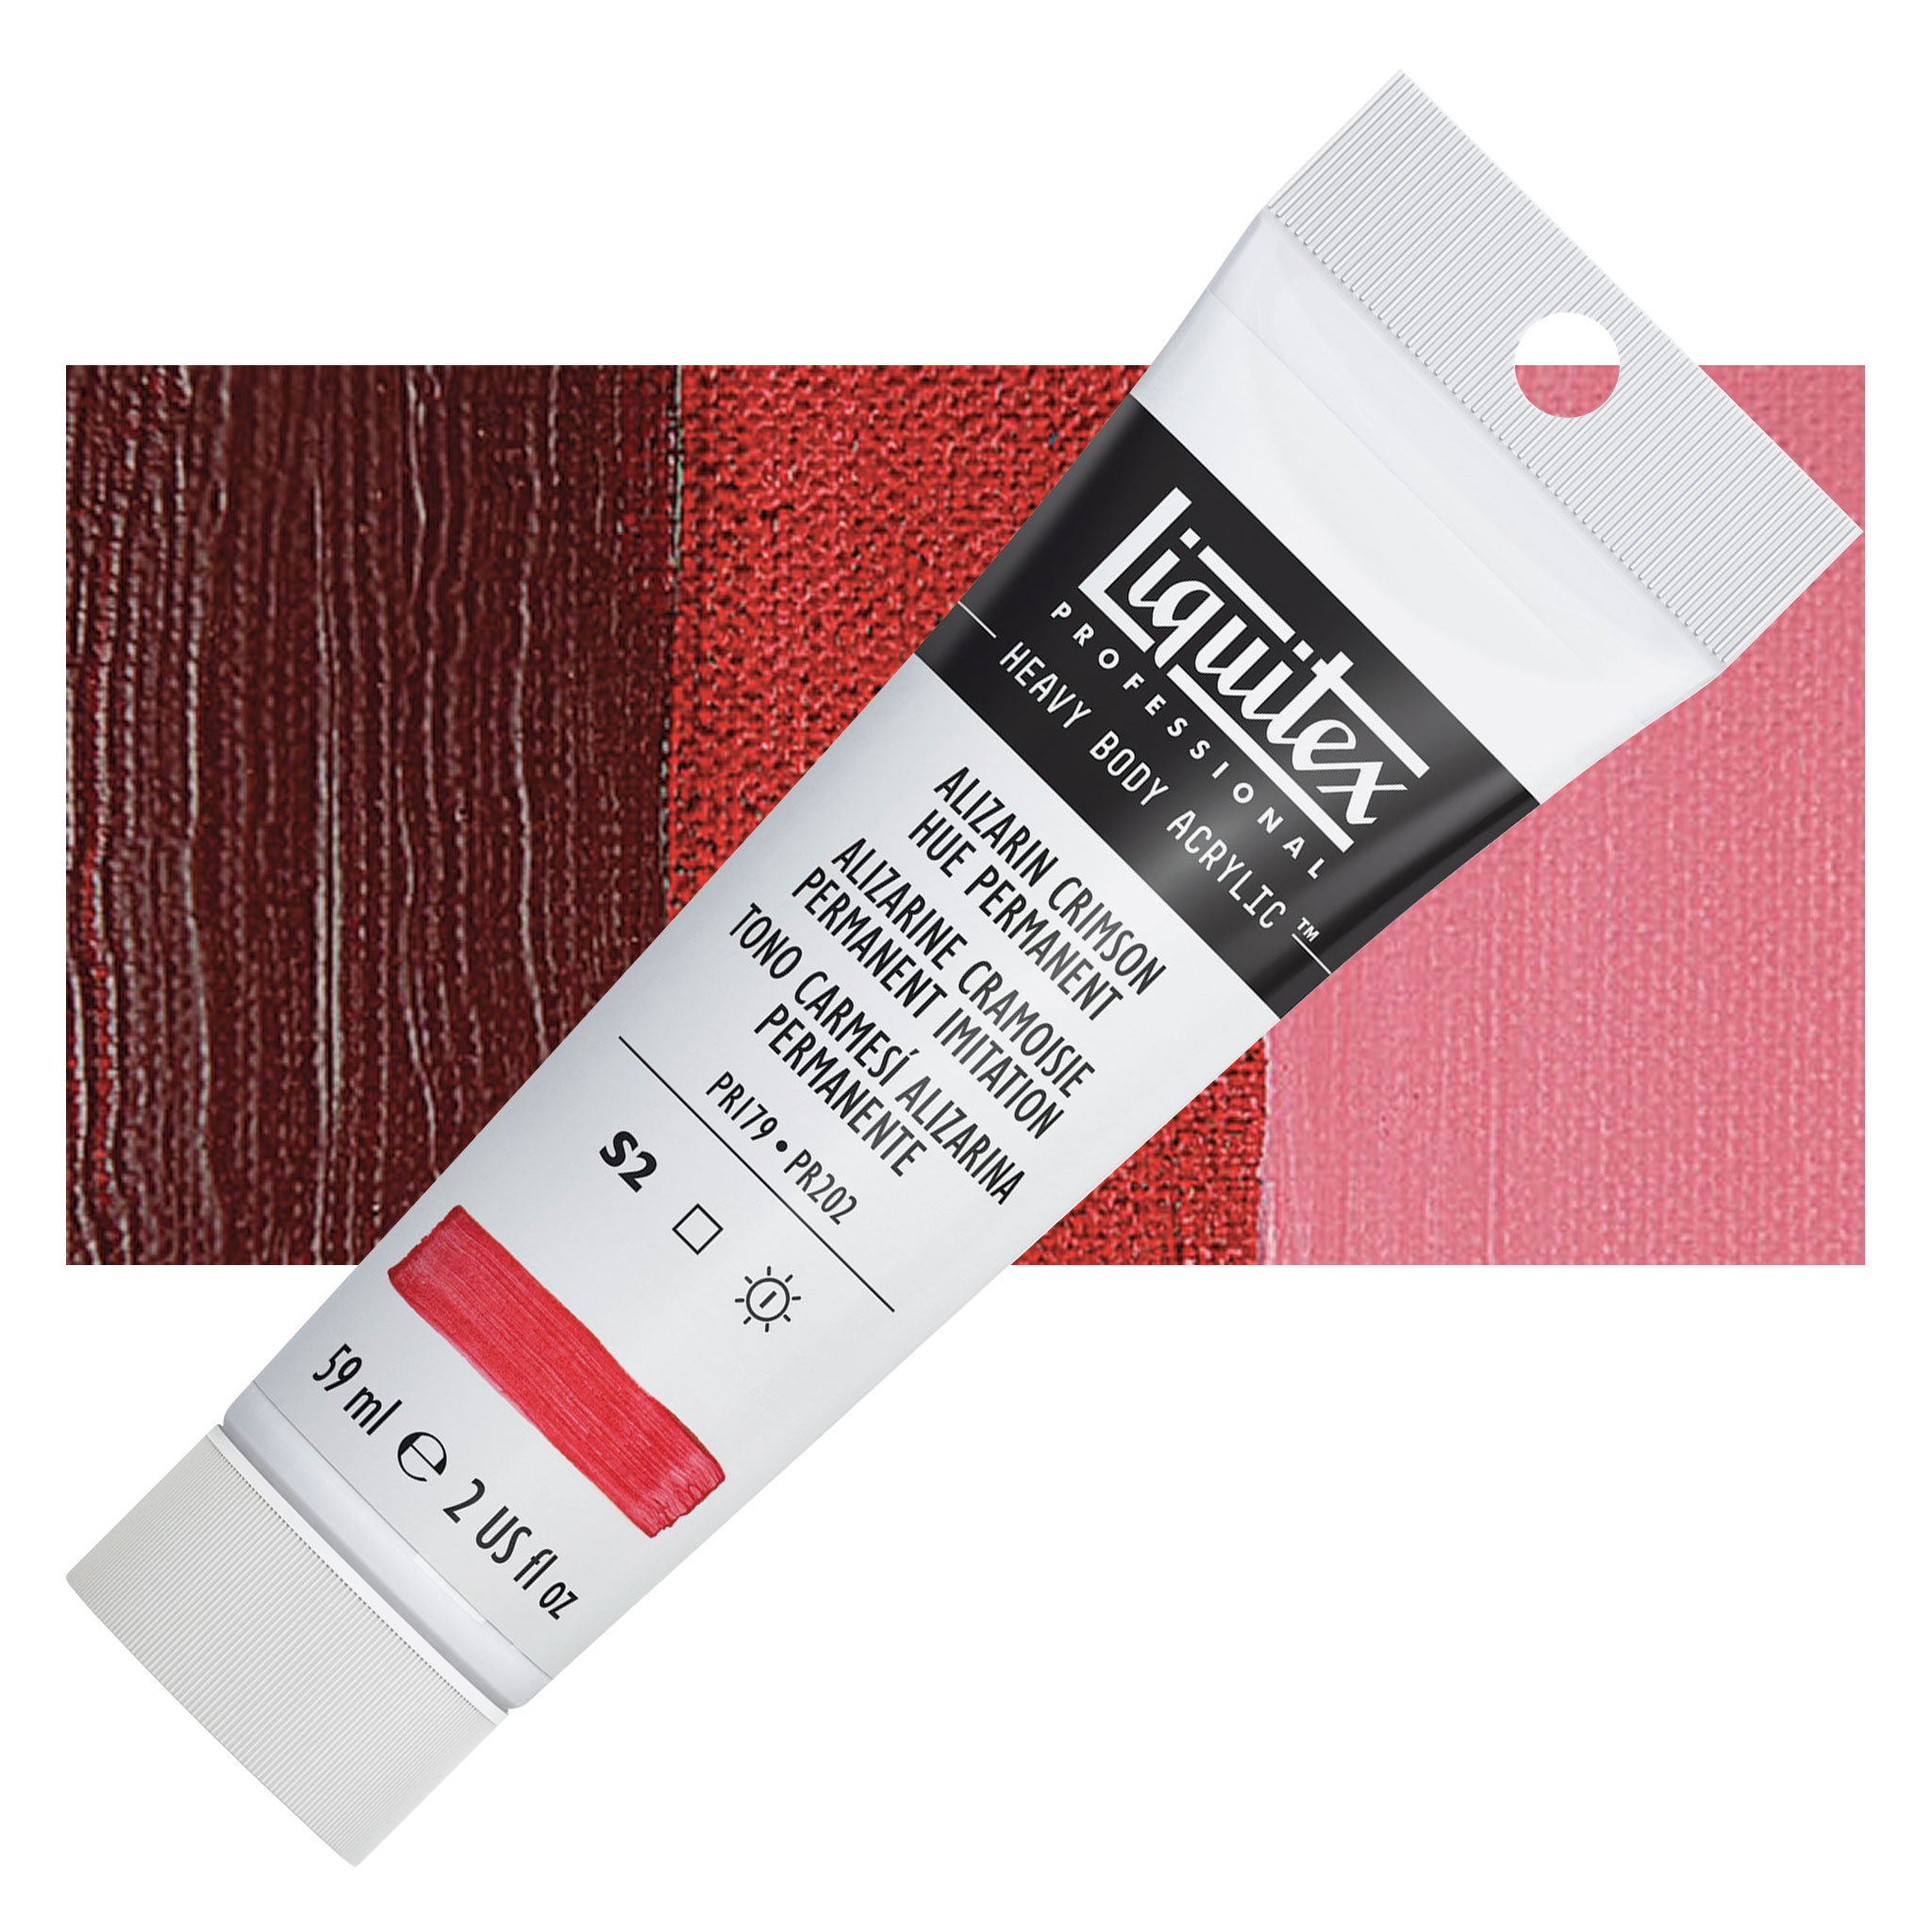 Liquitex : Professional : Heavy Body Acrylic Paint : 946ml : Alizarin  Crimson Hue Permanent (253) - Liquitex : Heavy Body - Liquitex - Brands